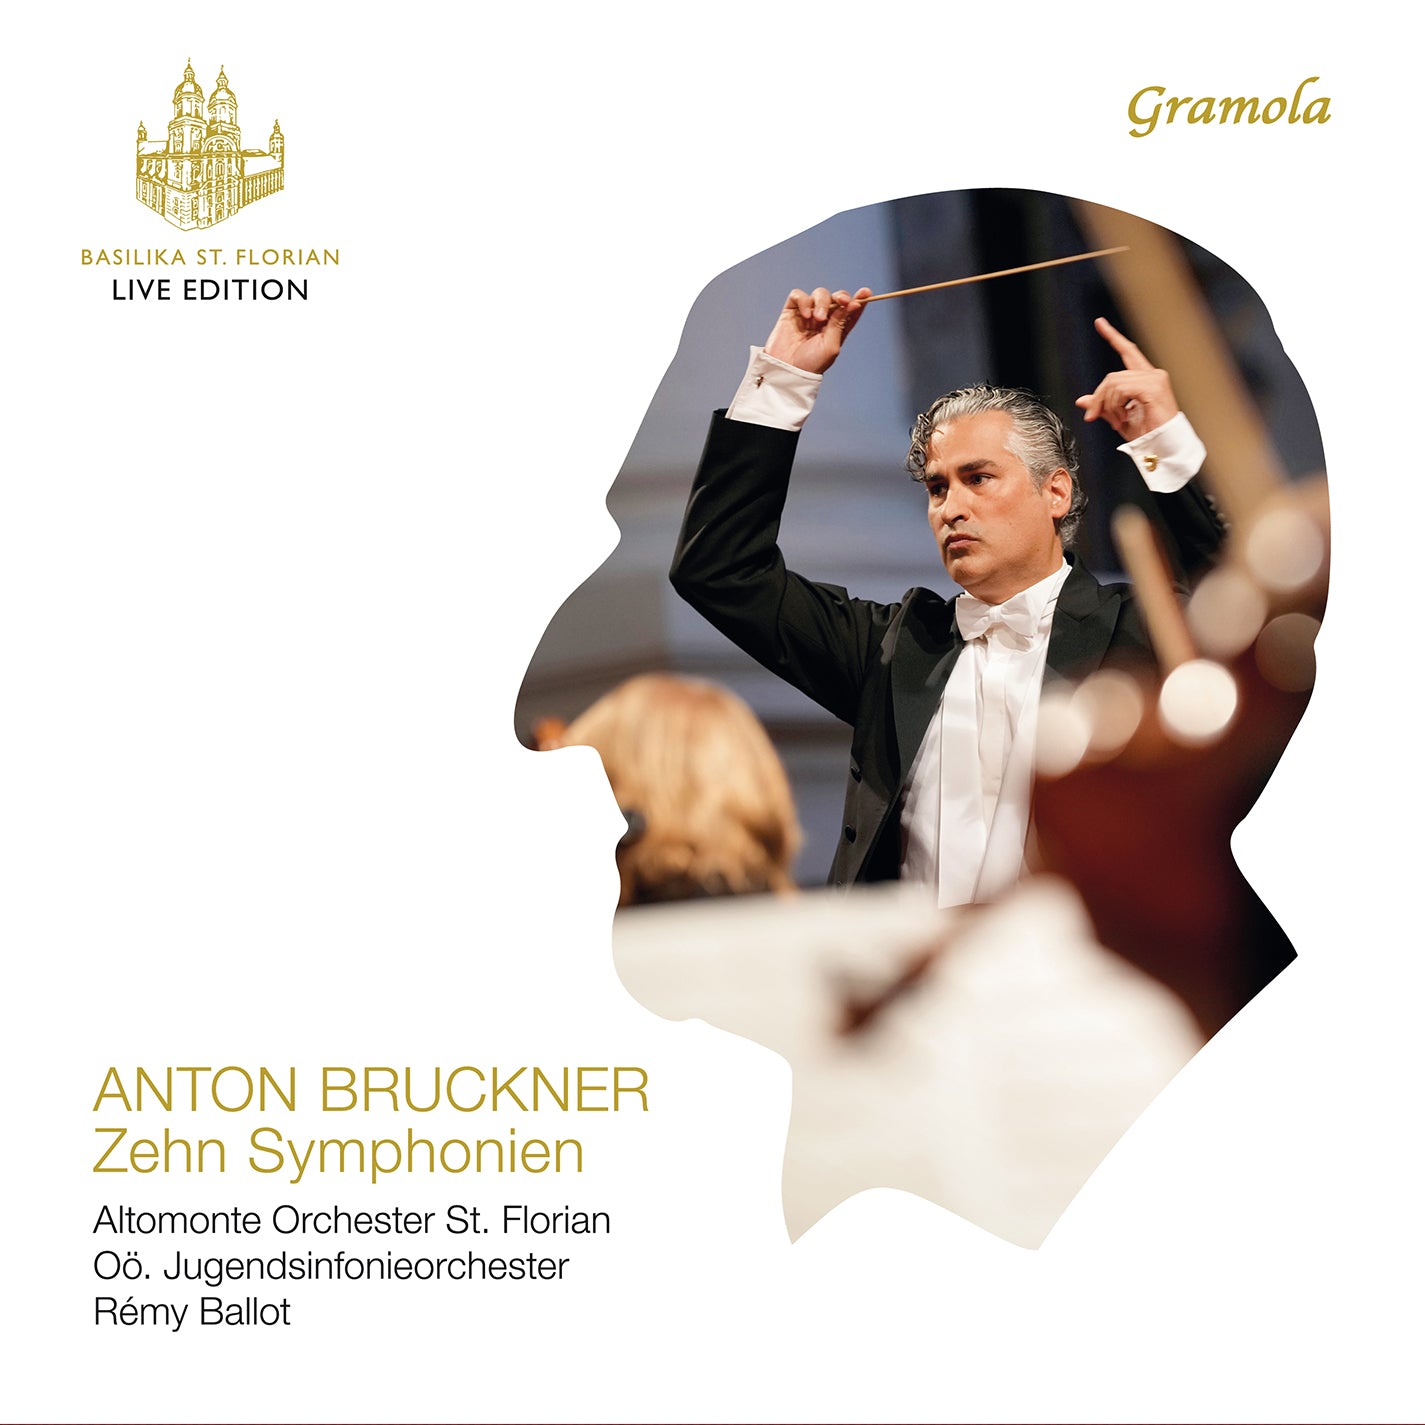 Bruckner: Zehn Symphonien / Altomonte Orchester St. Florian, Oo. Jugendsinfonieorchester